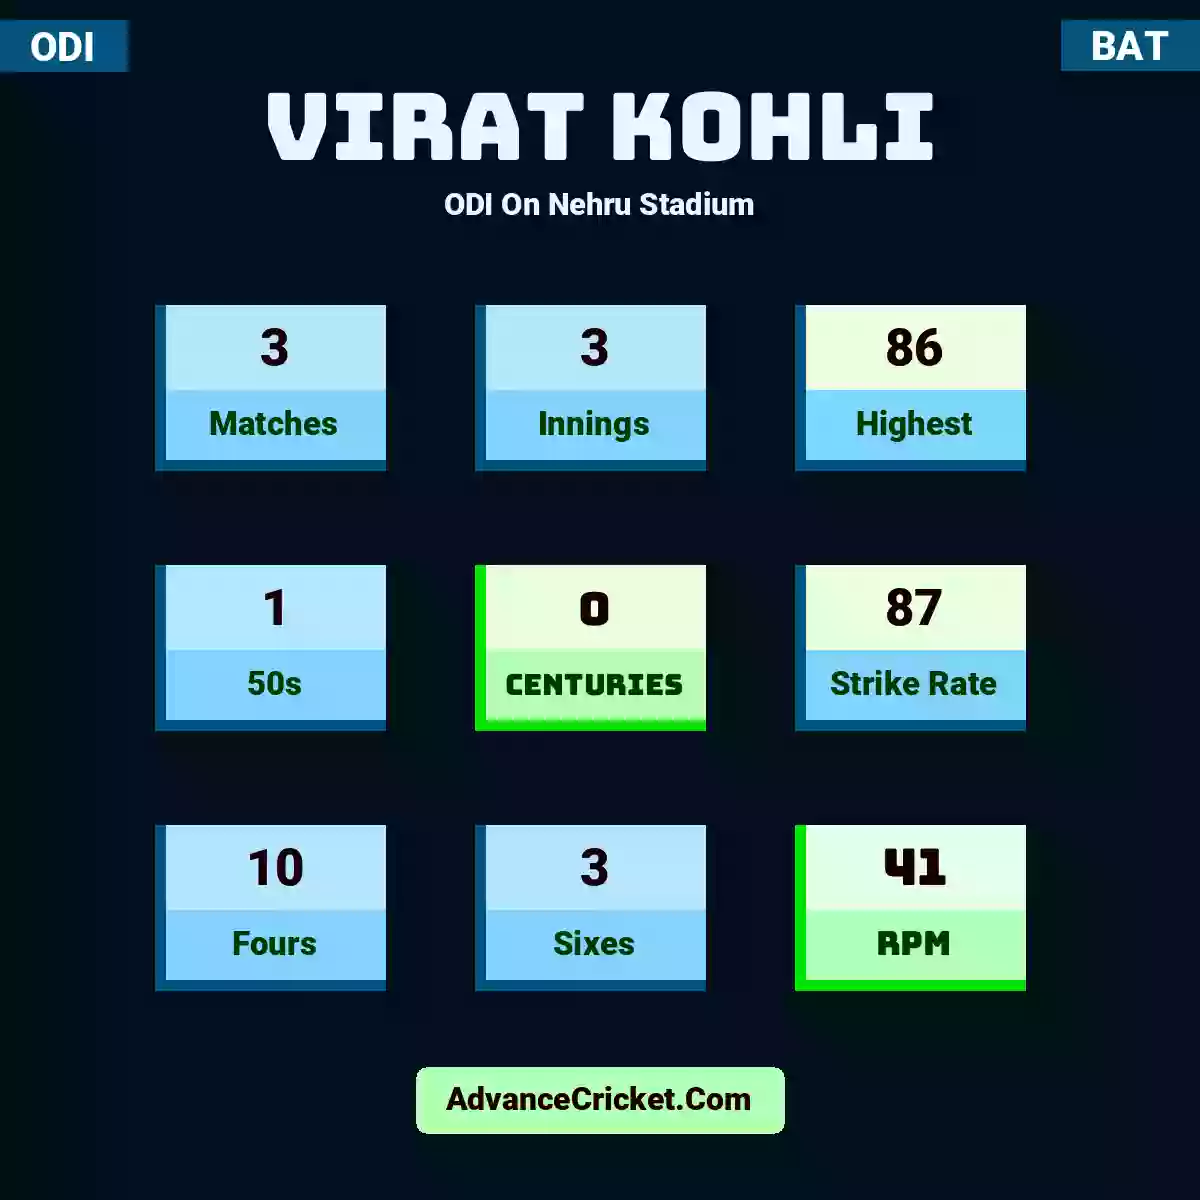 Virat Kohli ODI  On Nehru Stadium, Virat Kohli played 1 matches, scored 105 runs as highest, 0 half-centuries, and 1 centuries, with a strike rate of 100. V.Kohli hit 10 fours and 0 sixes, with an RPM of 105.